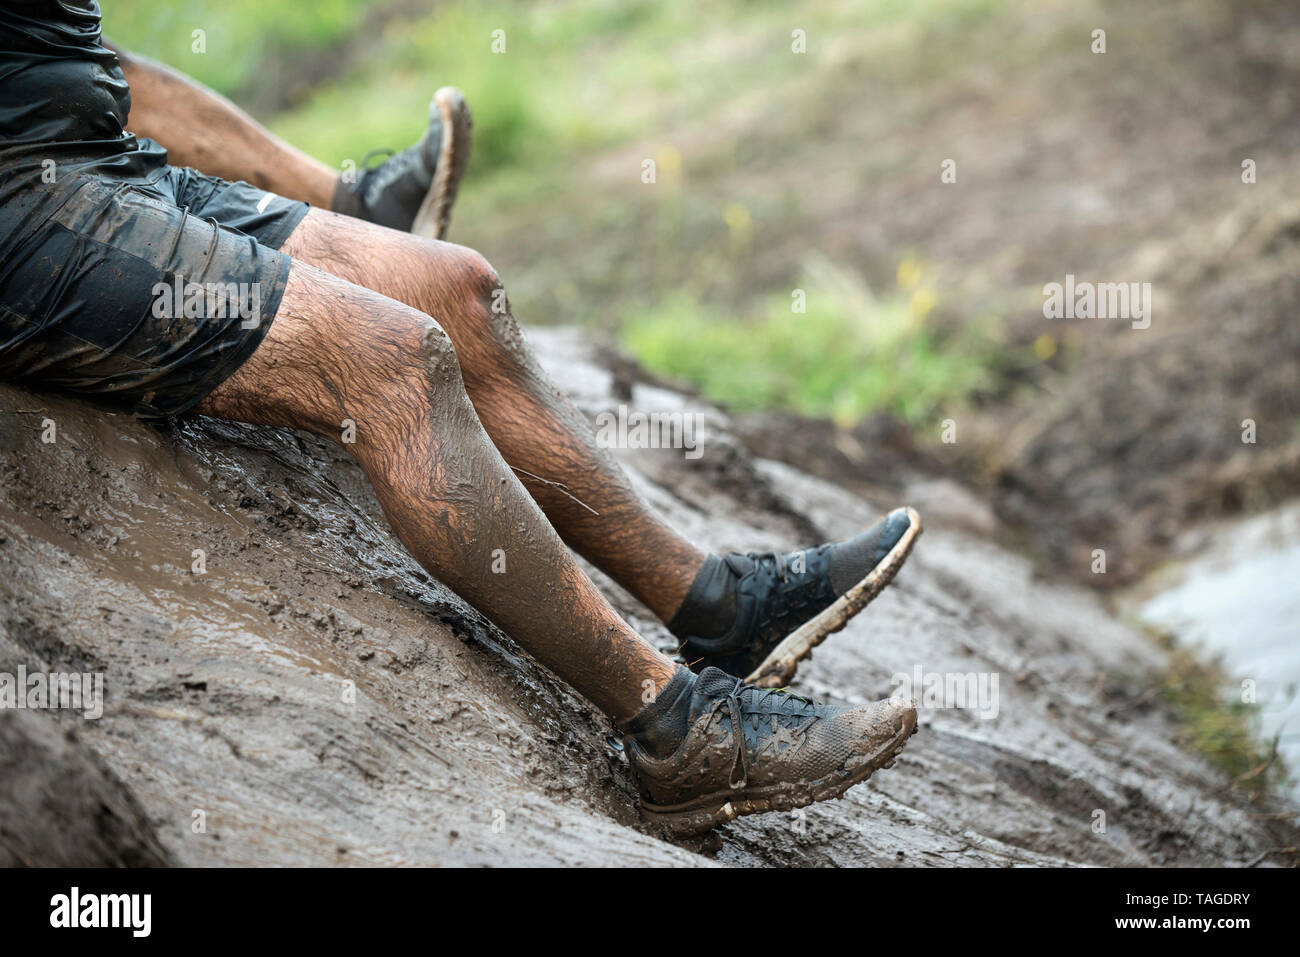 SOFIA, Bulgaria - 07 Julio 2018 - un hombre se desliza a través de una ladera fangosa a caer en una piscina de barro en una carrera de resistencia Foto de stock